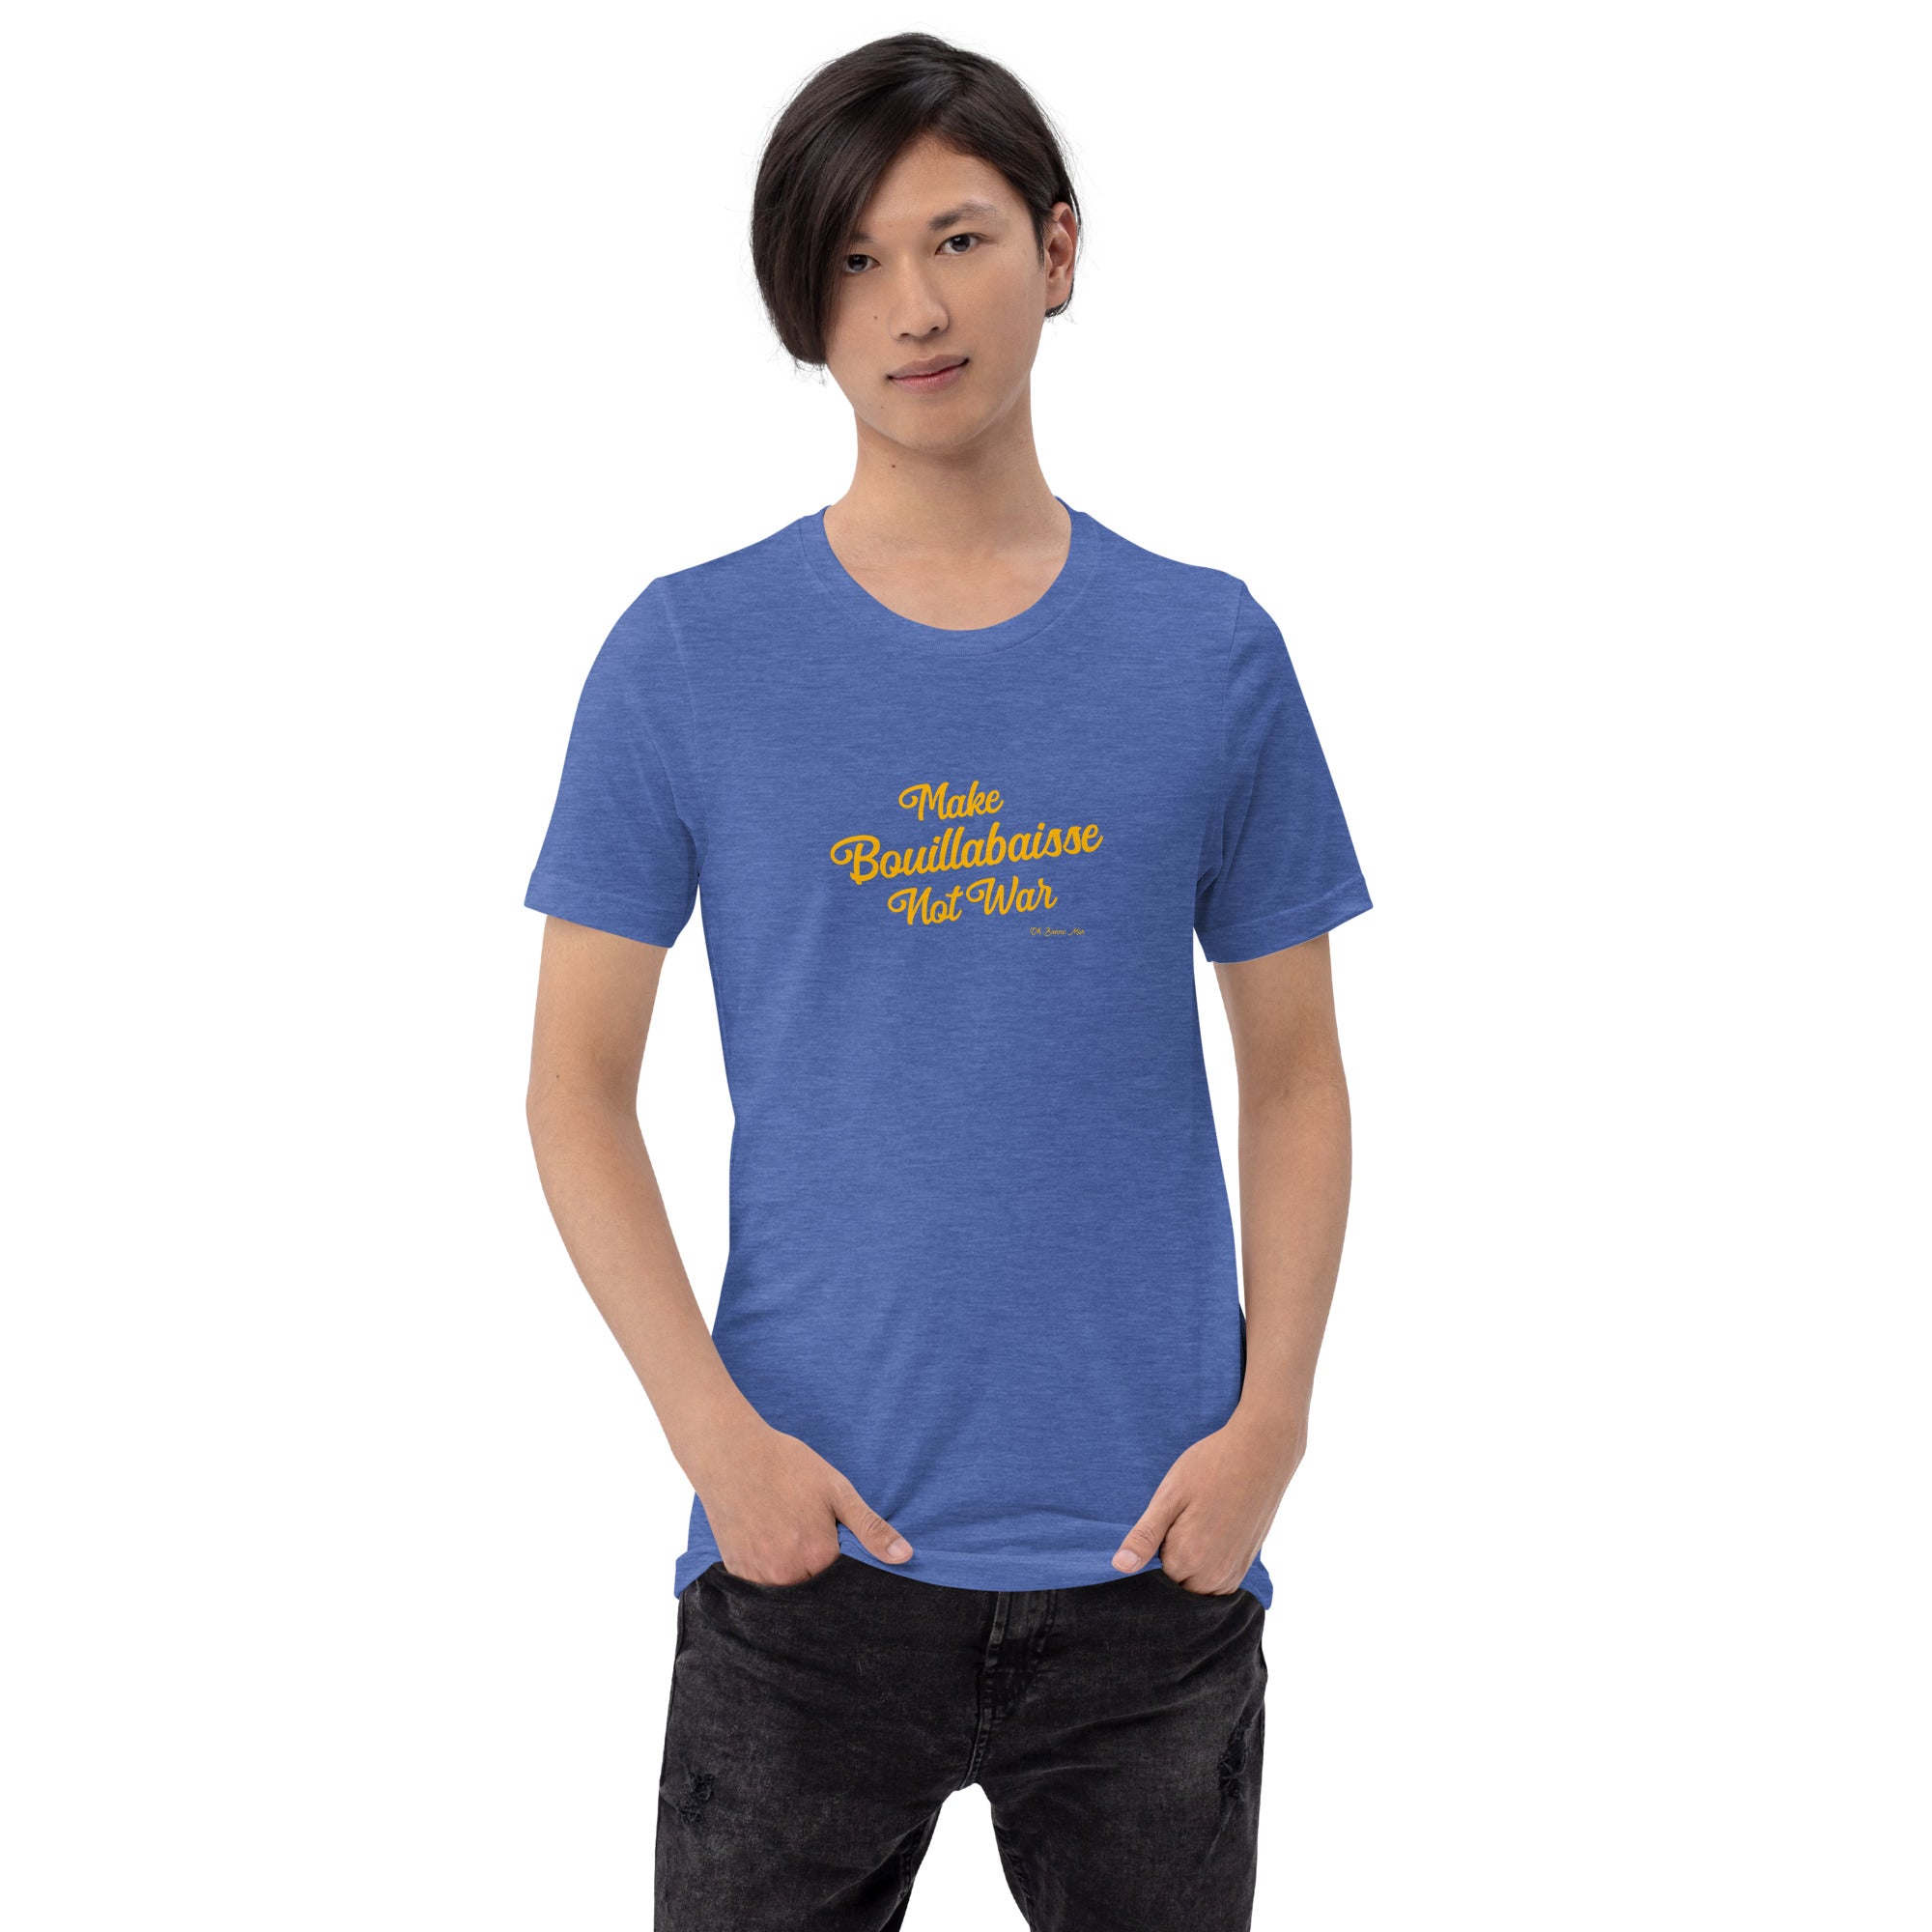 Unisex t-shirt Make Bouillabaisse Not War Text Only on dark heather colors